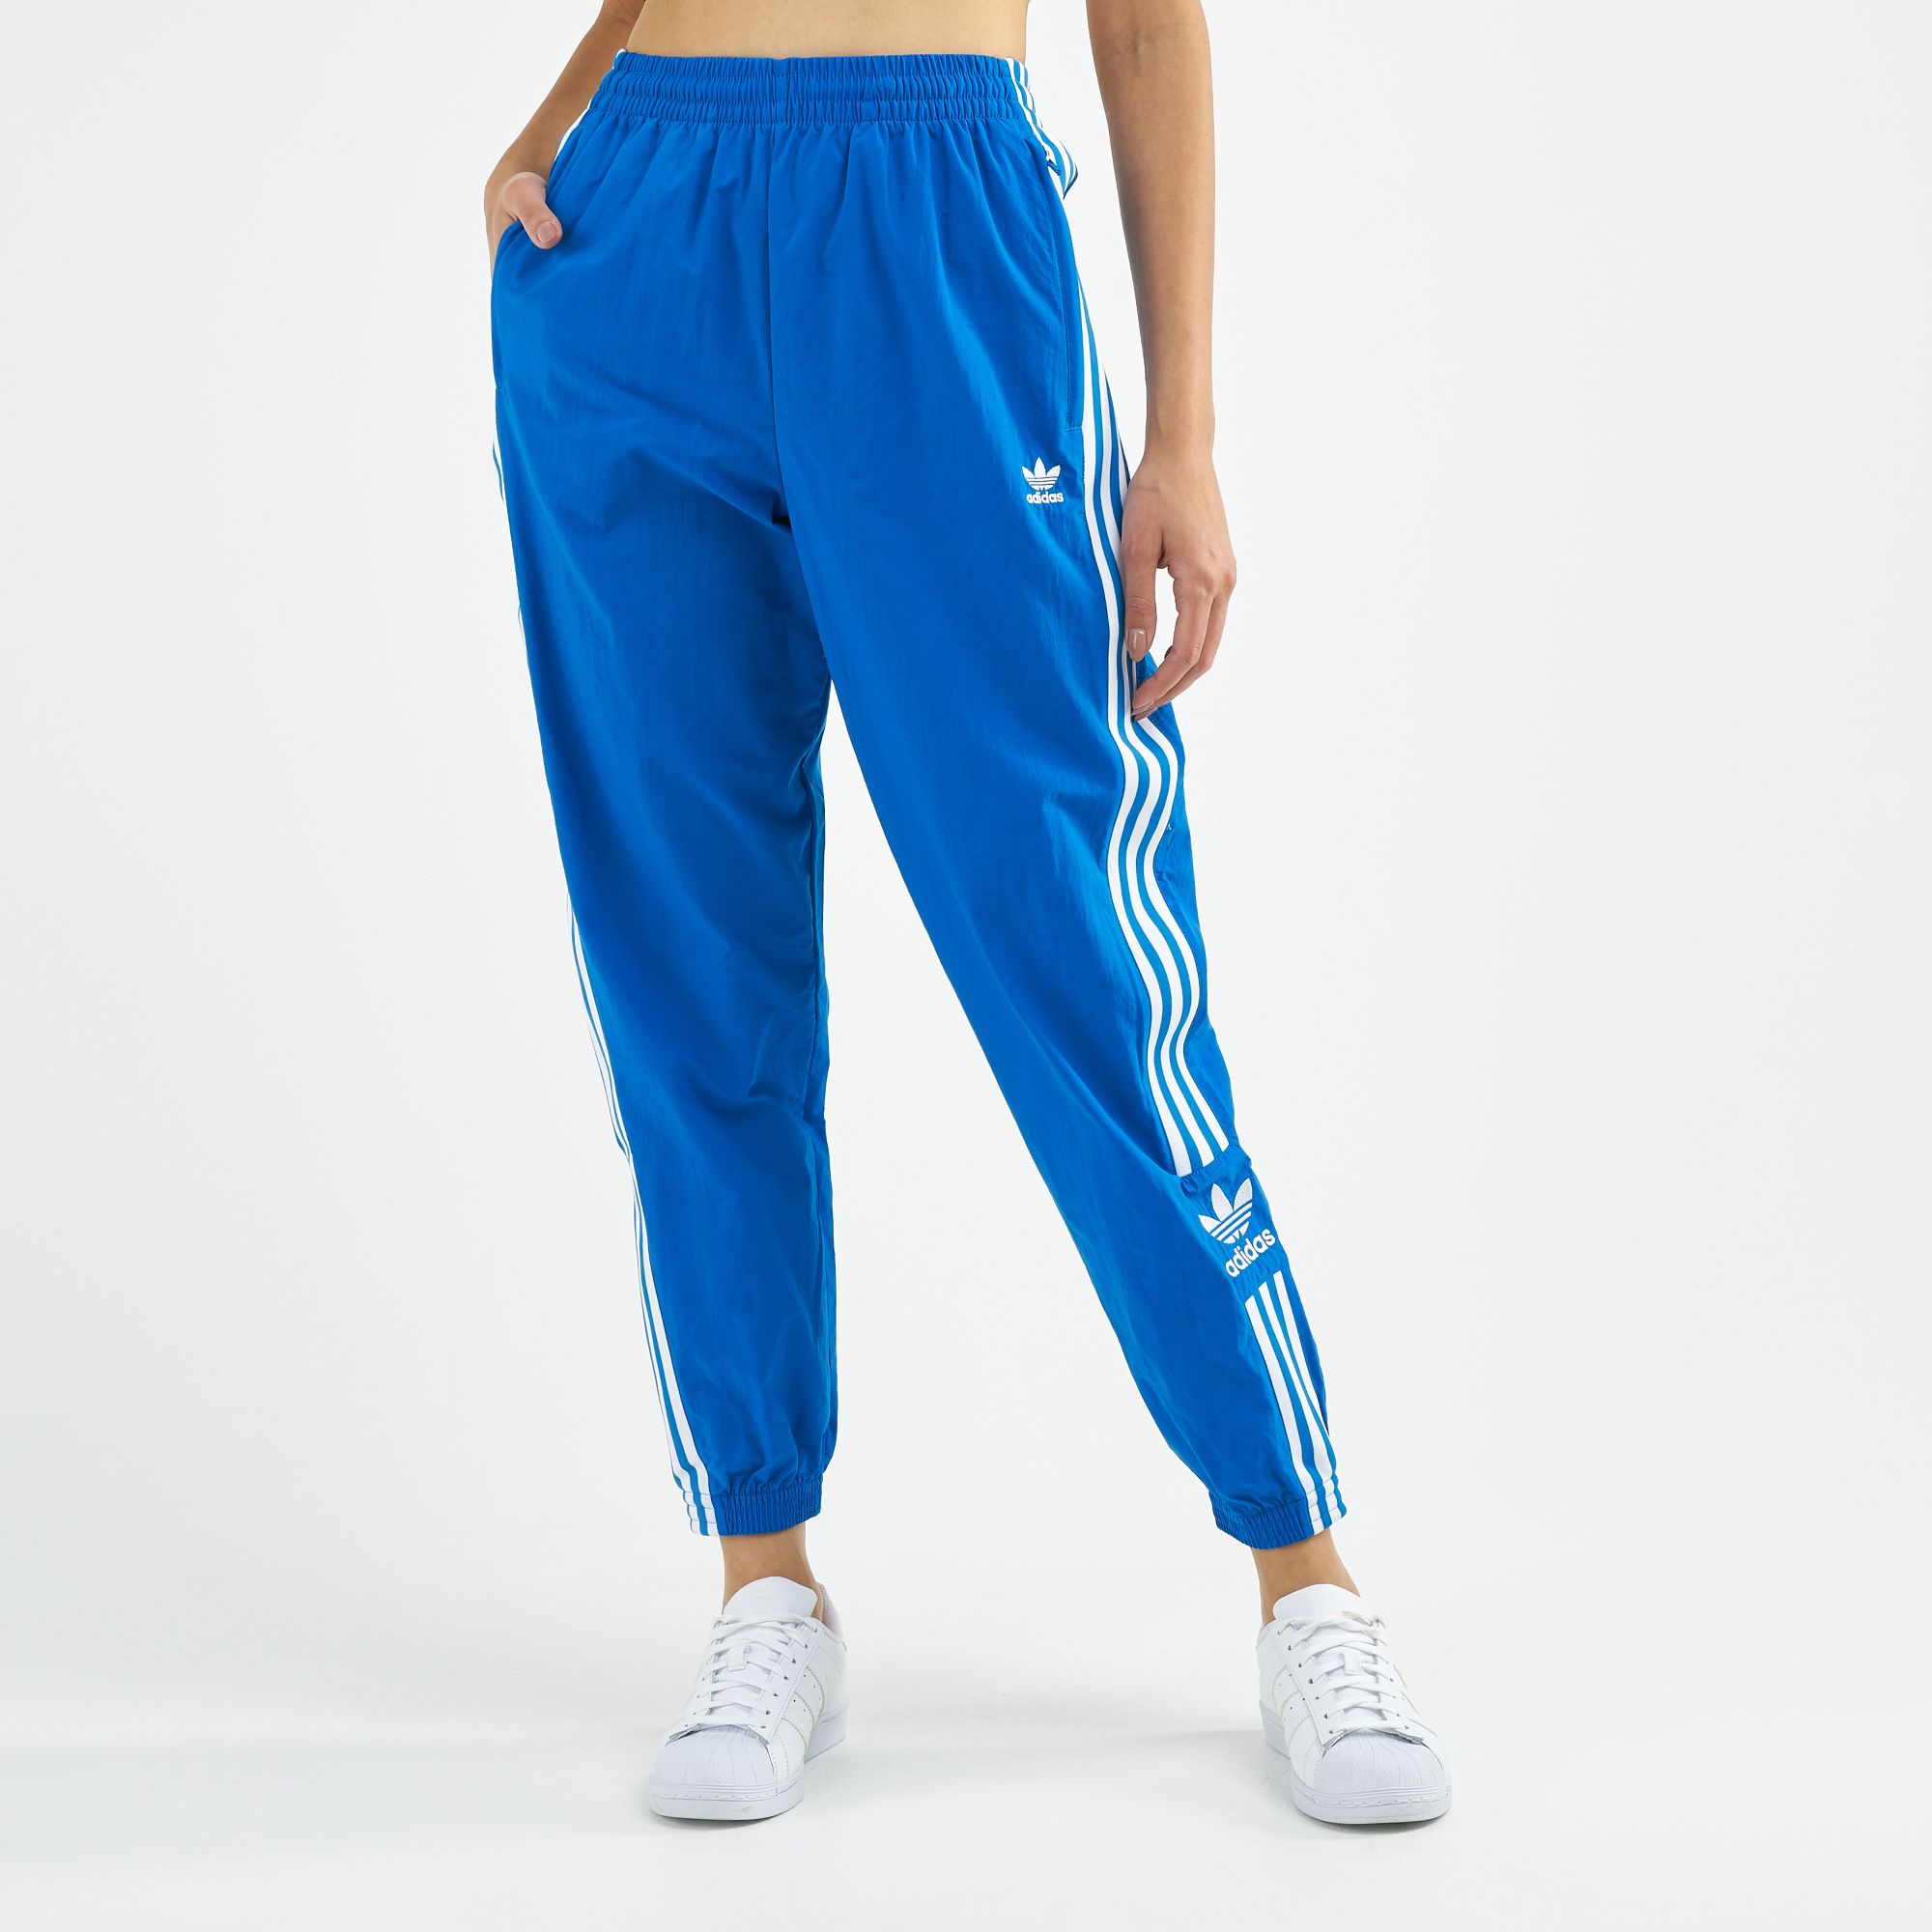 adidas blue pants womens